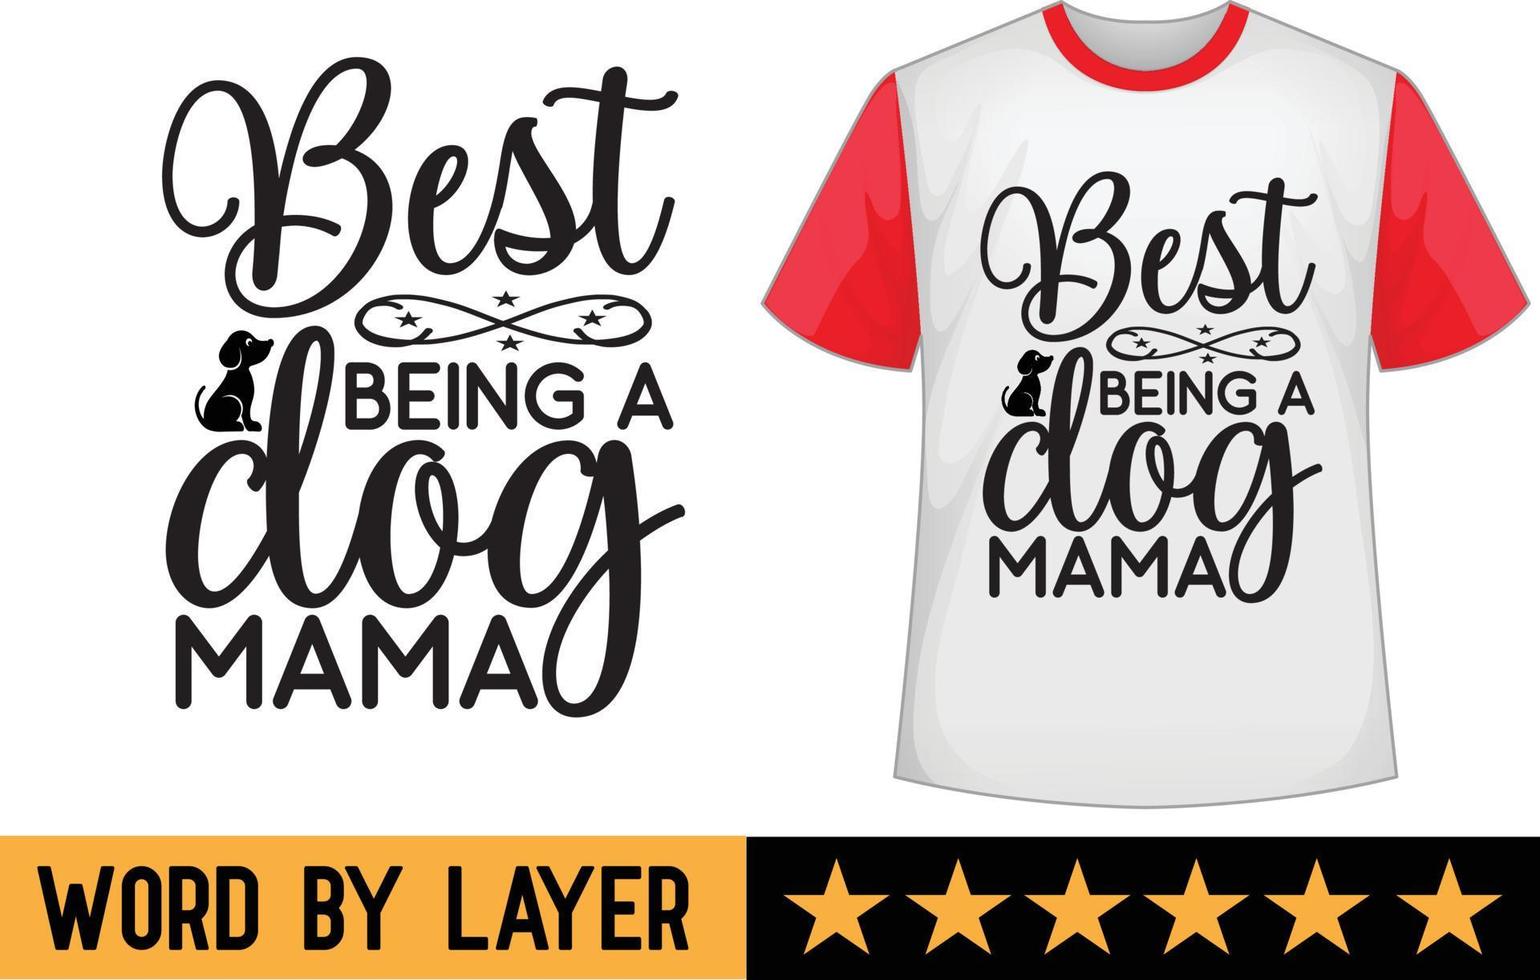 Dog svg t shirt design vector